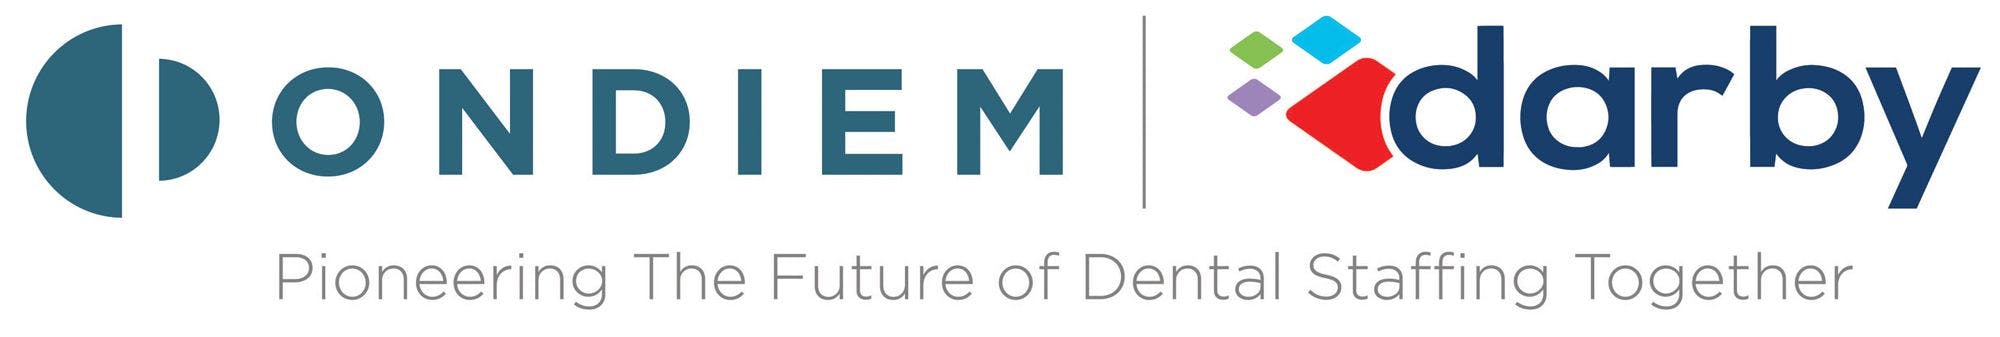 Darby Announces Strategic Partnership with onDiem